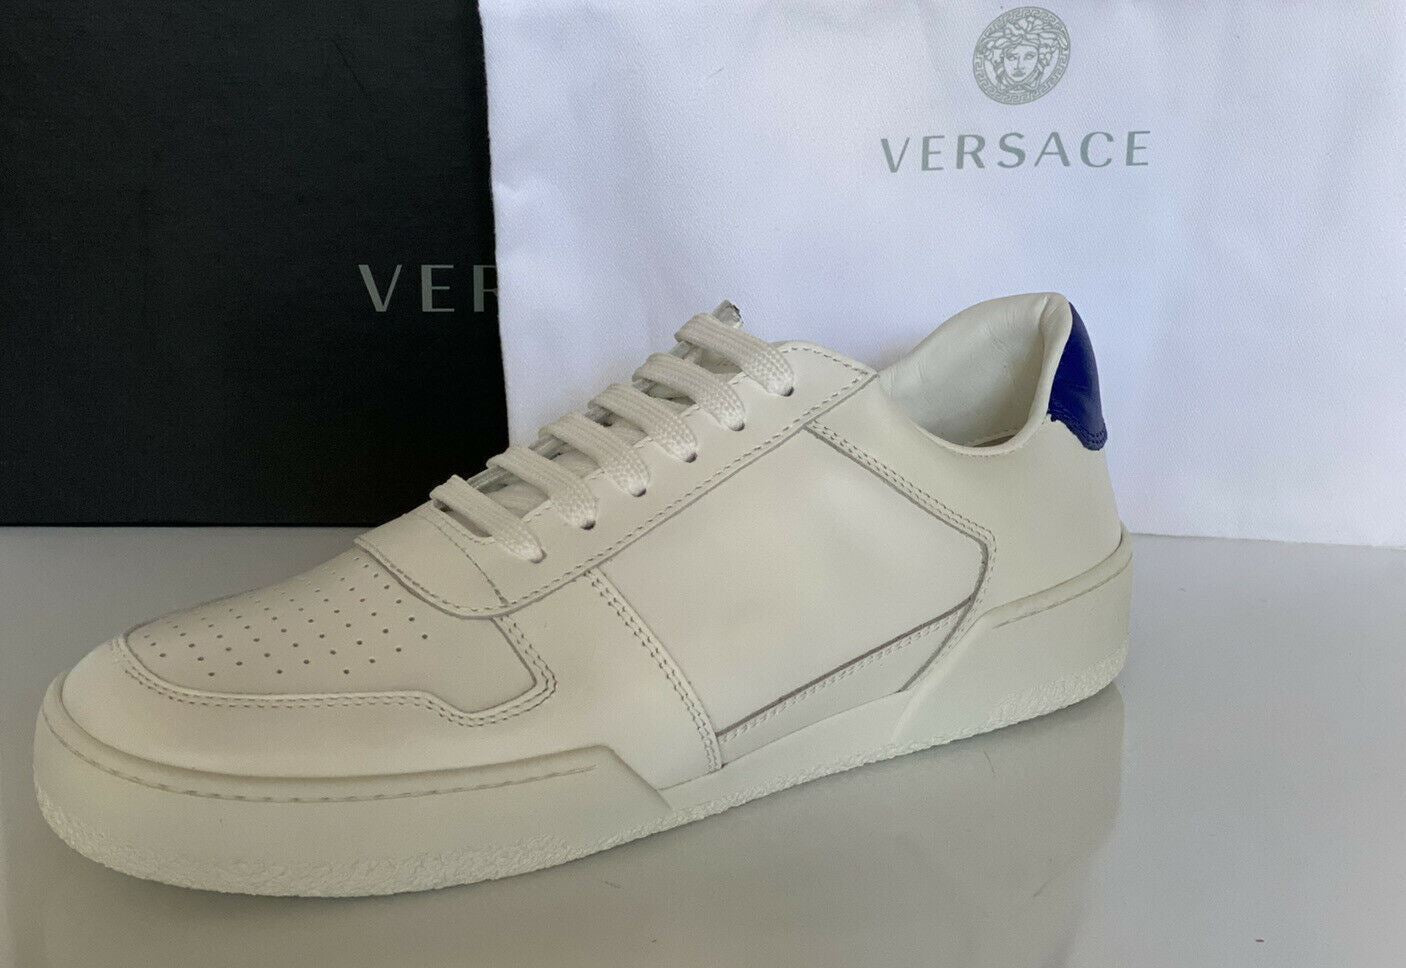 NIB 495 $ Versace Herren-Sneakers aus weißem Leder 9 US (42 Euo) Italien DSU7843 